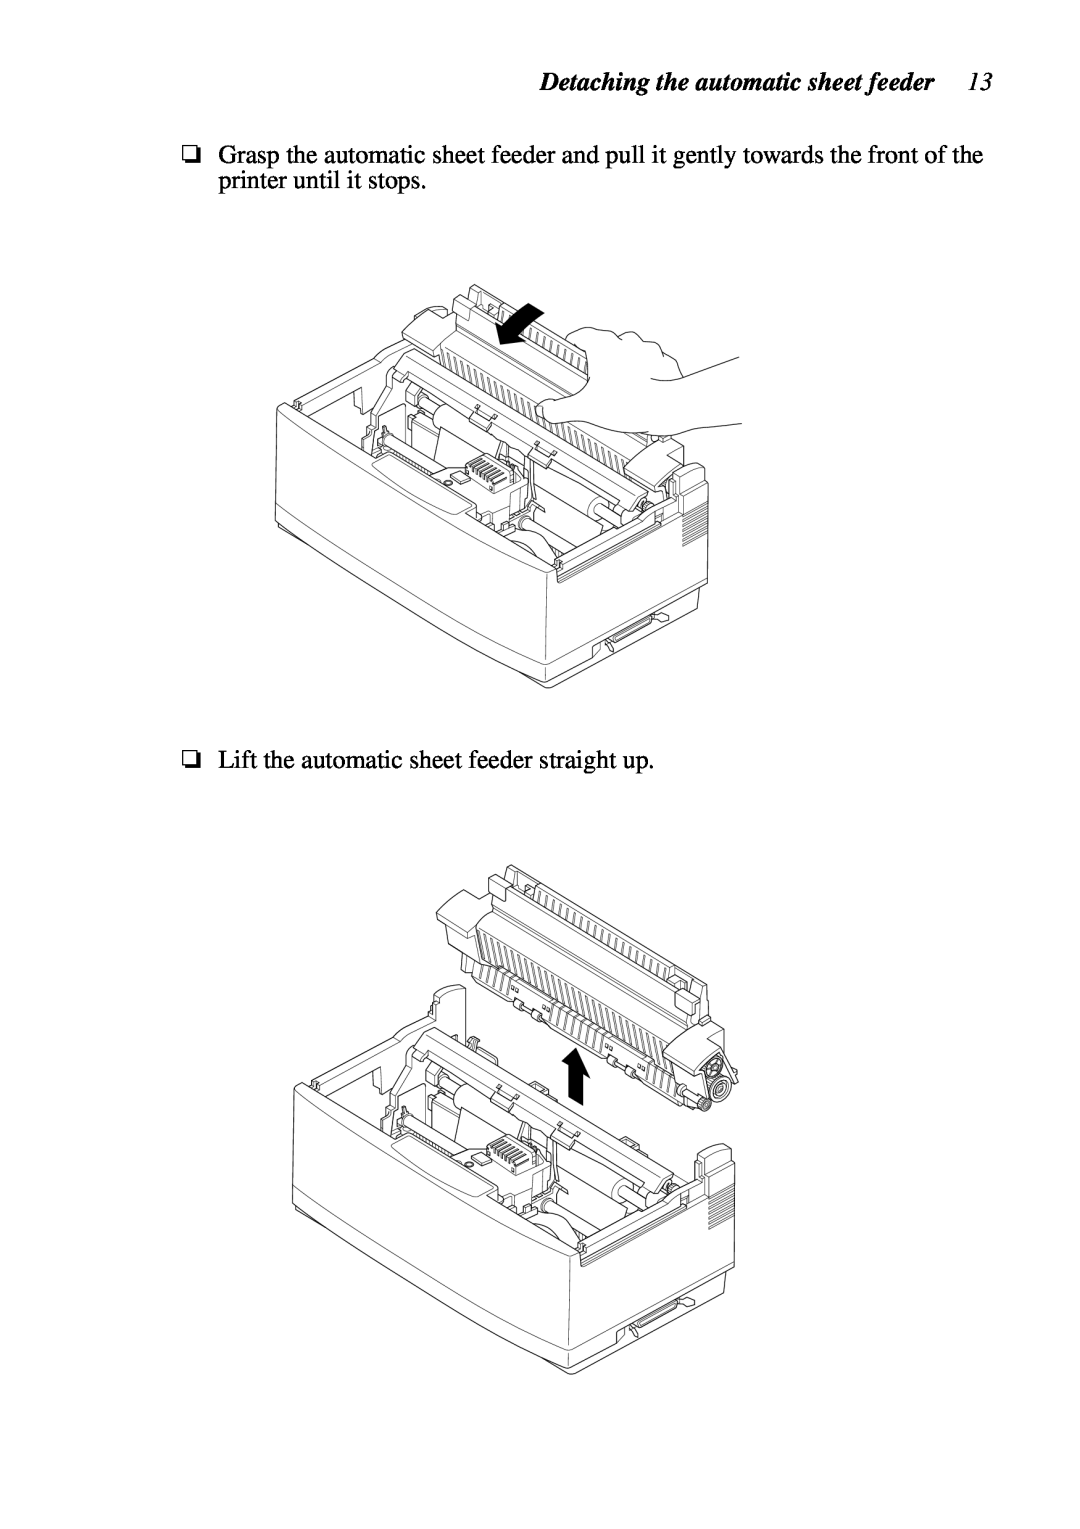 Star Micronics NX-2460C user manual Detaching the automatic sheet feeder, Lift the automatic sheet feeder straight up 